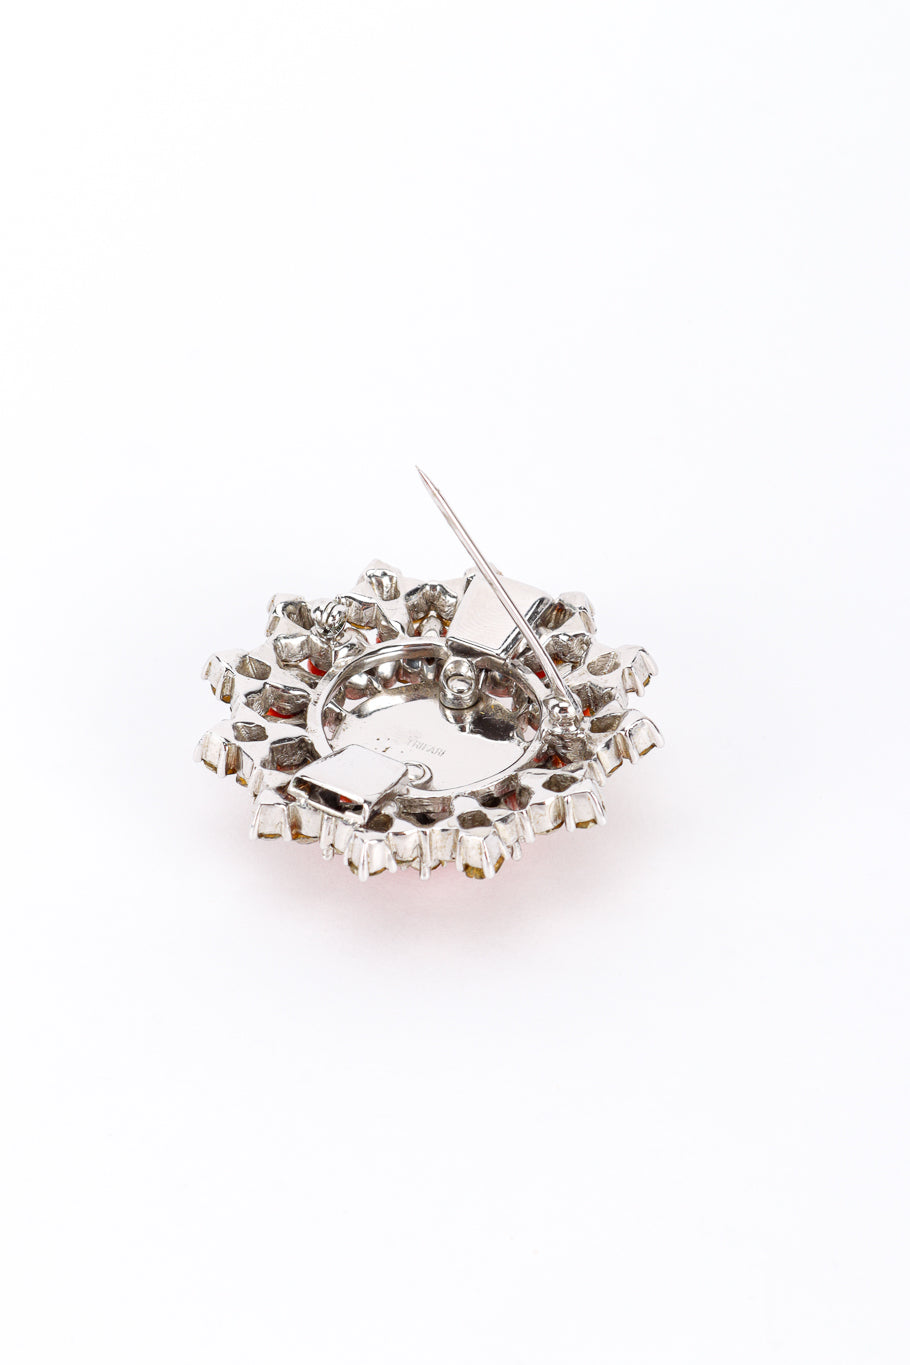 Vintage Trifari Coral Lucite Necklace & Earring Set pendant brooch pin unclasped @recess la